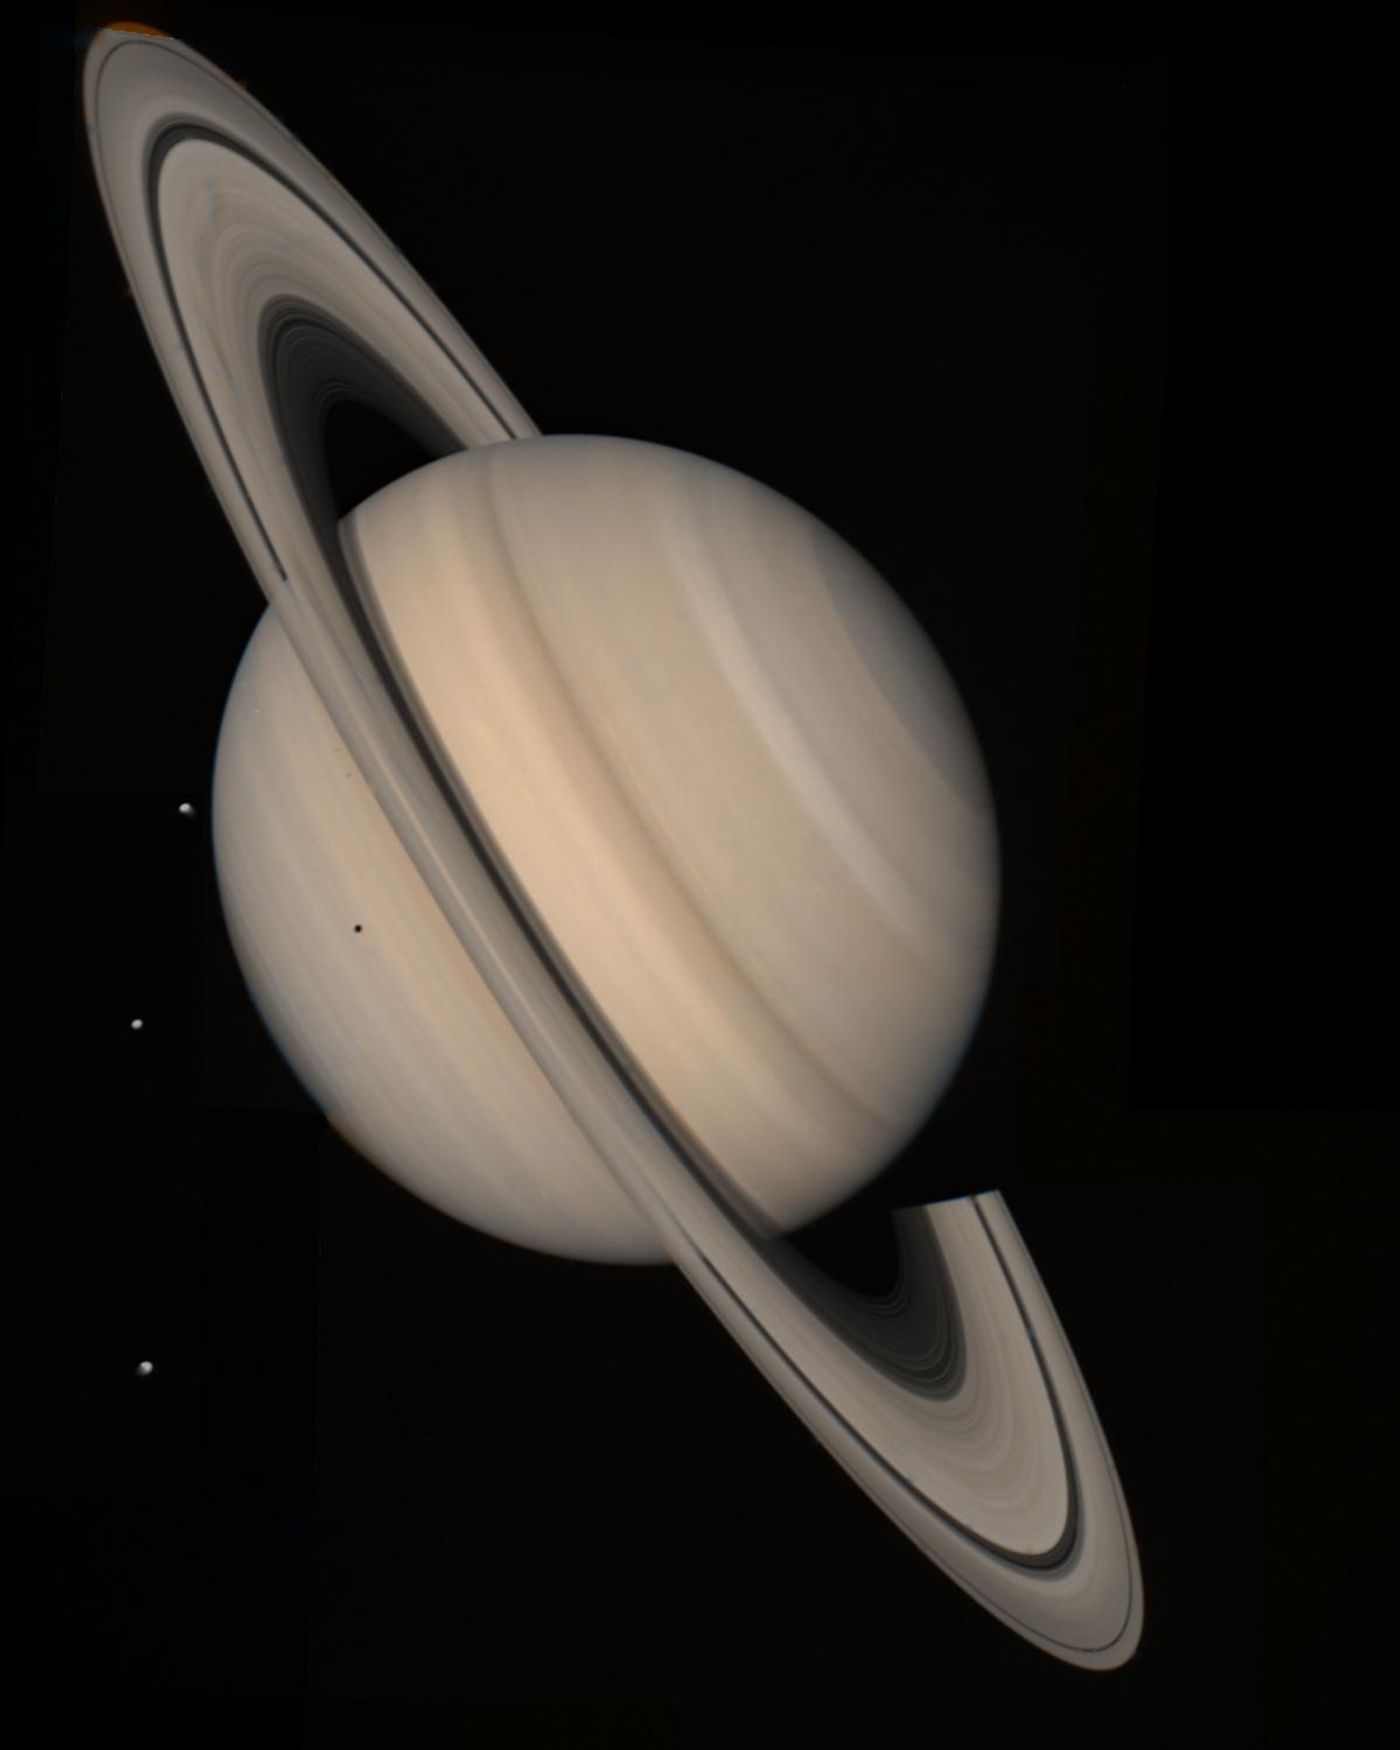 Voyager 2 image of Saturn. Image Credit: NASA/JPL